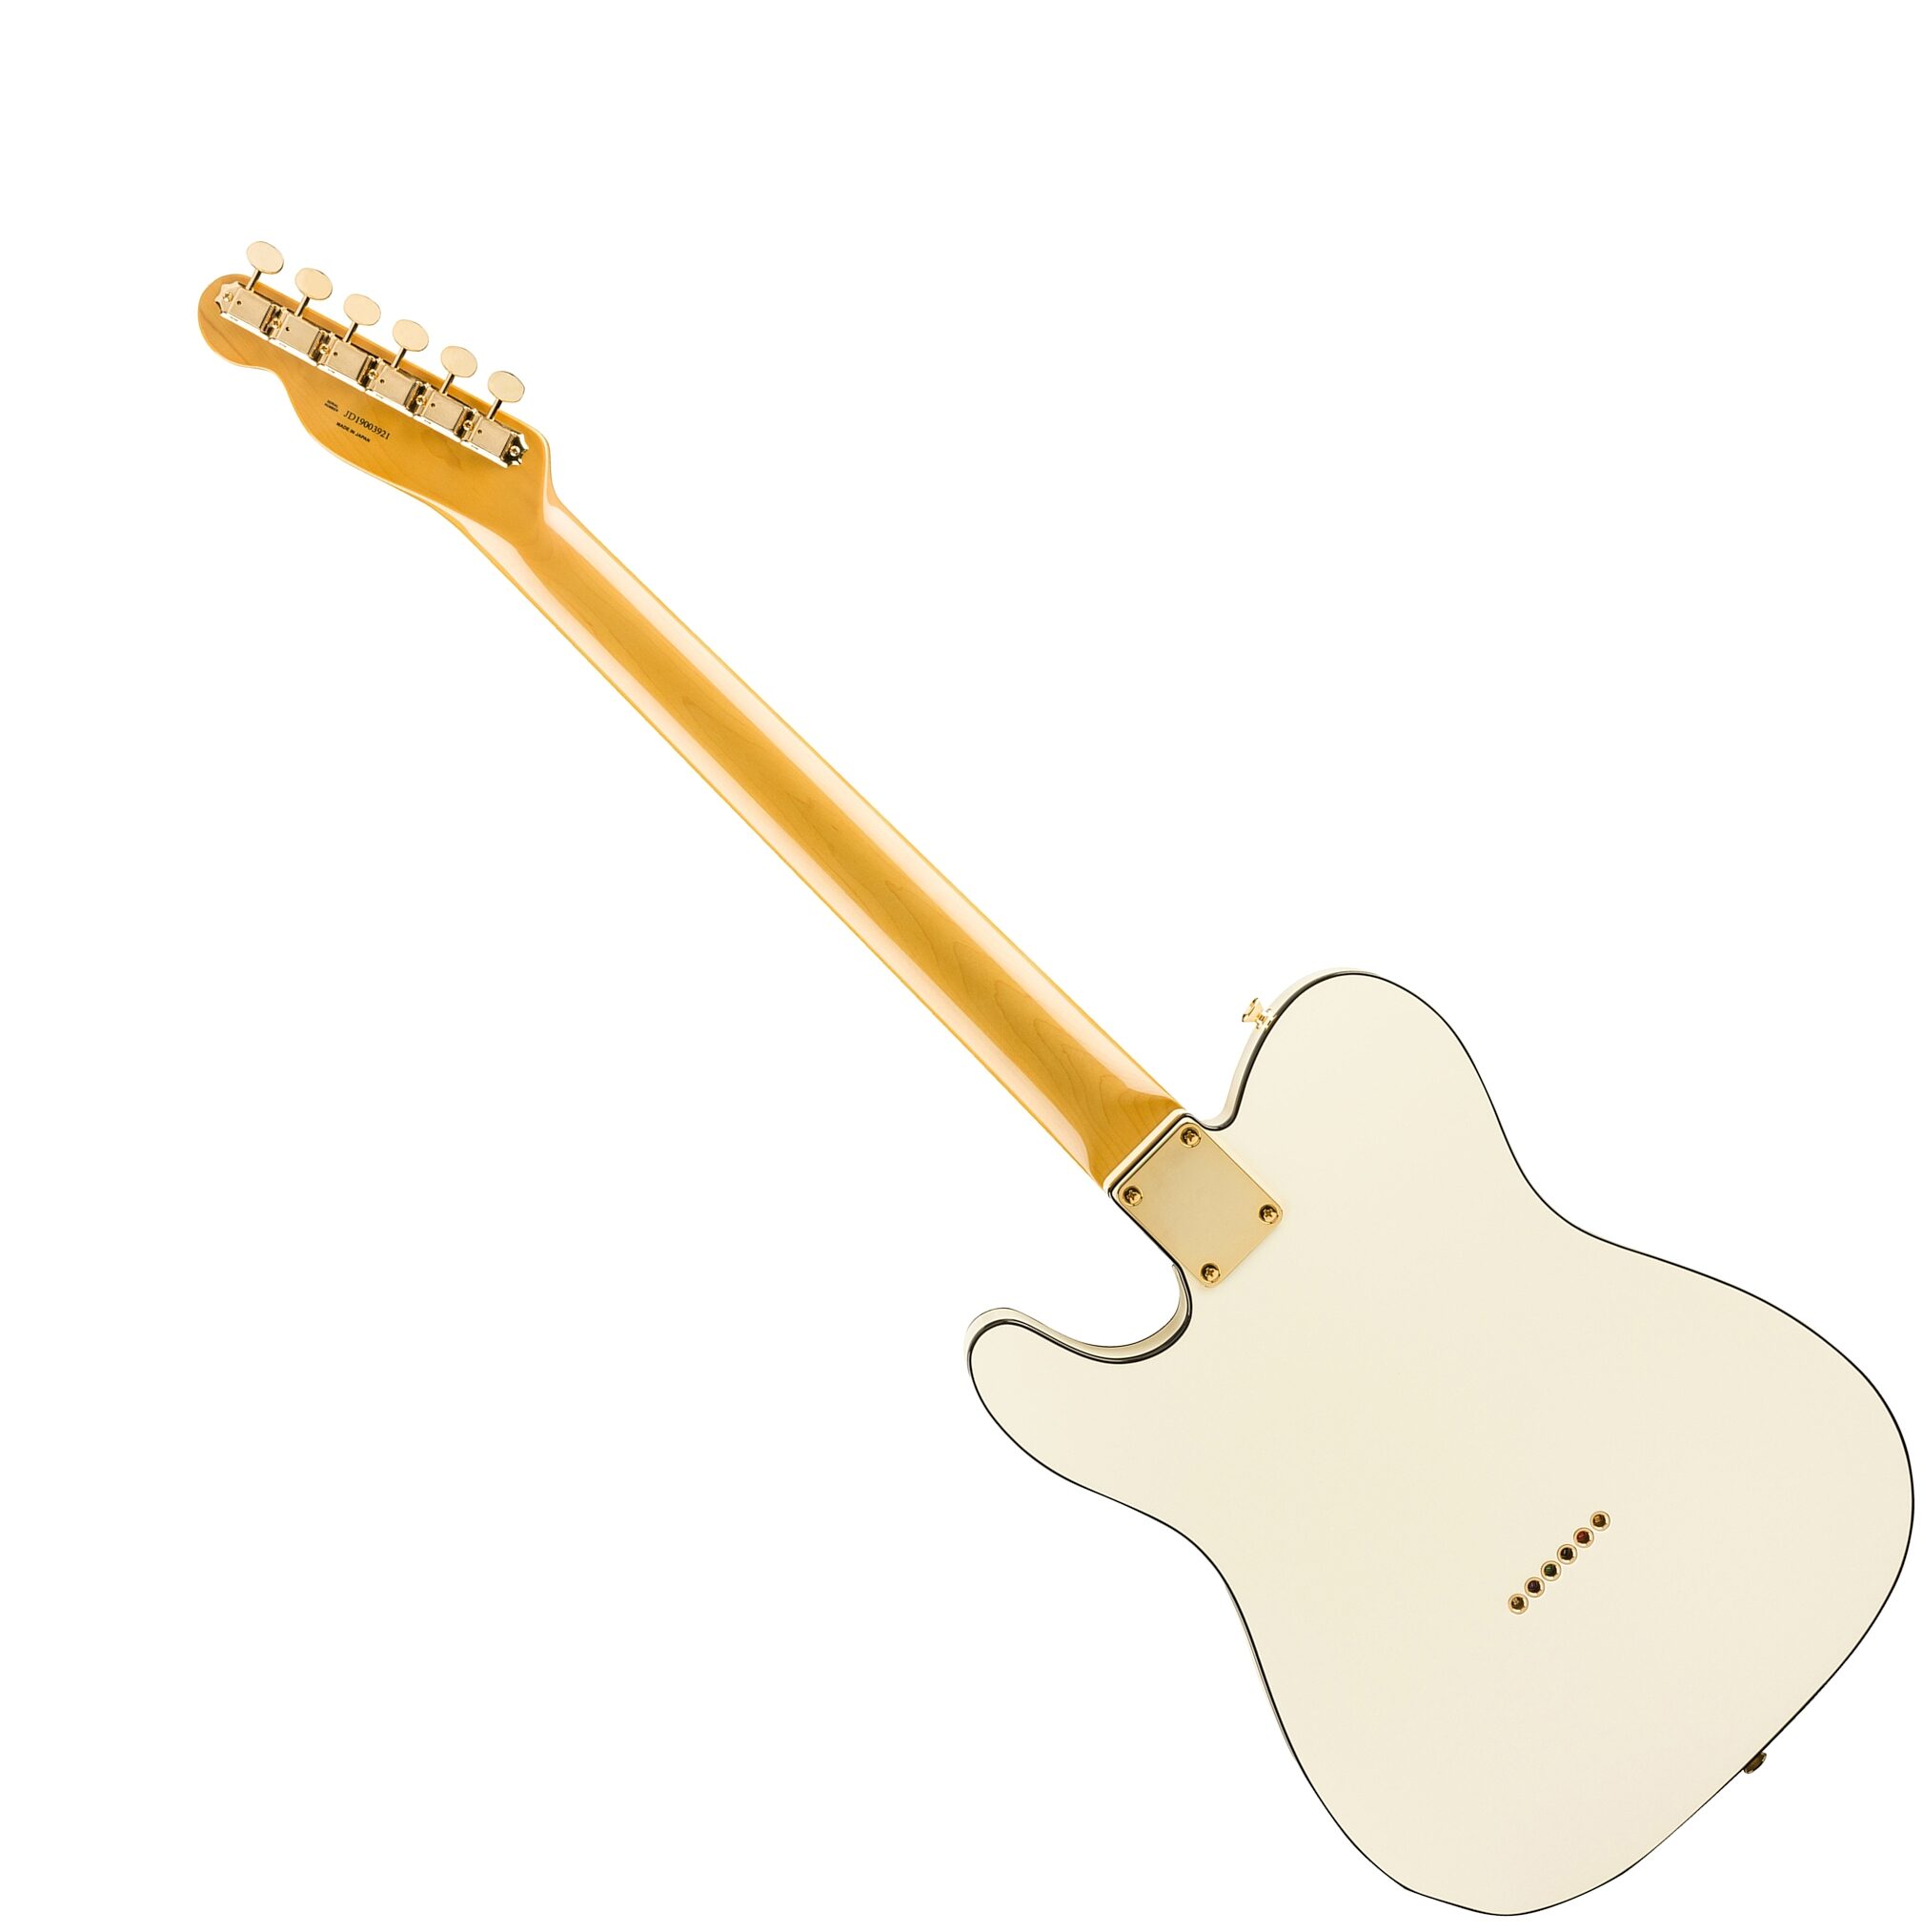 Fender Limited Edition Made In Japan Daybreak Telecaster Guitar